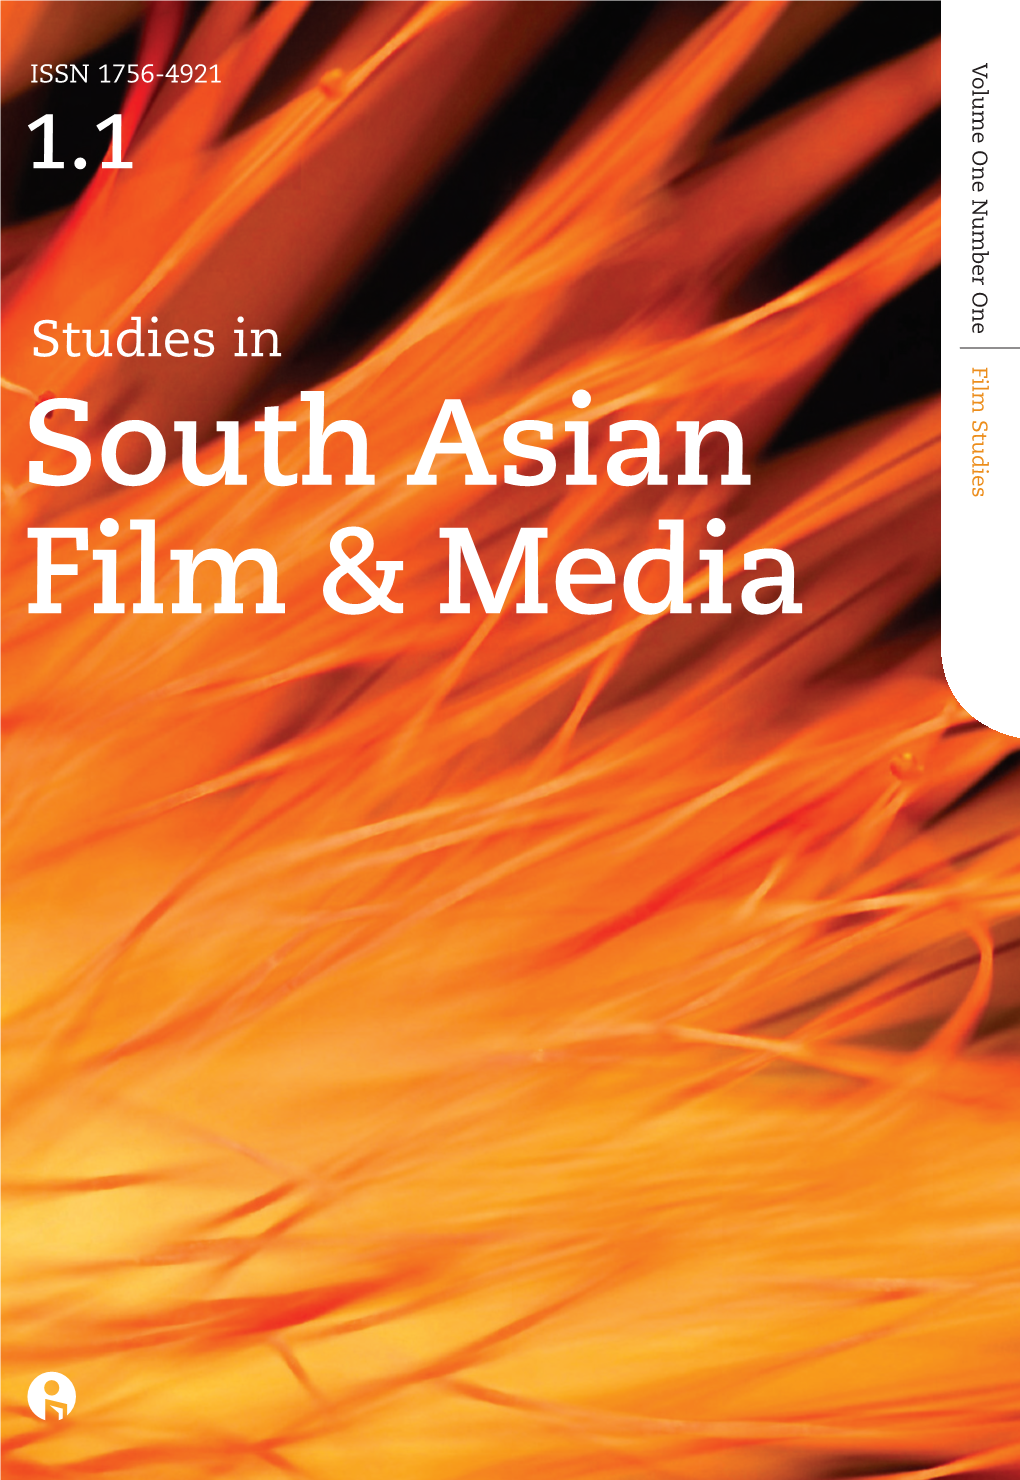 South Asian Film & Media